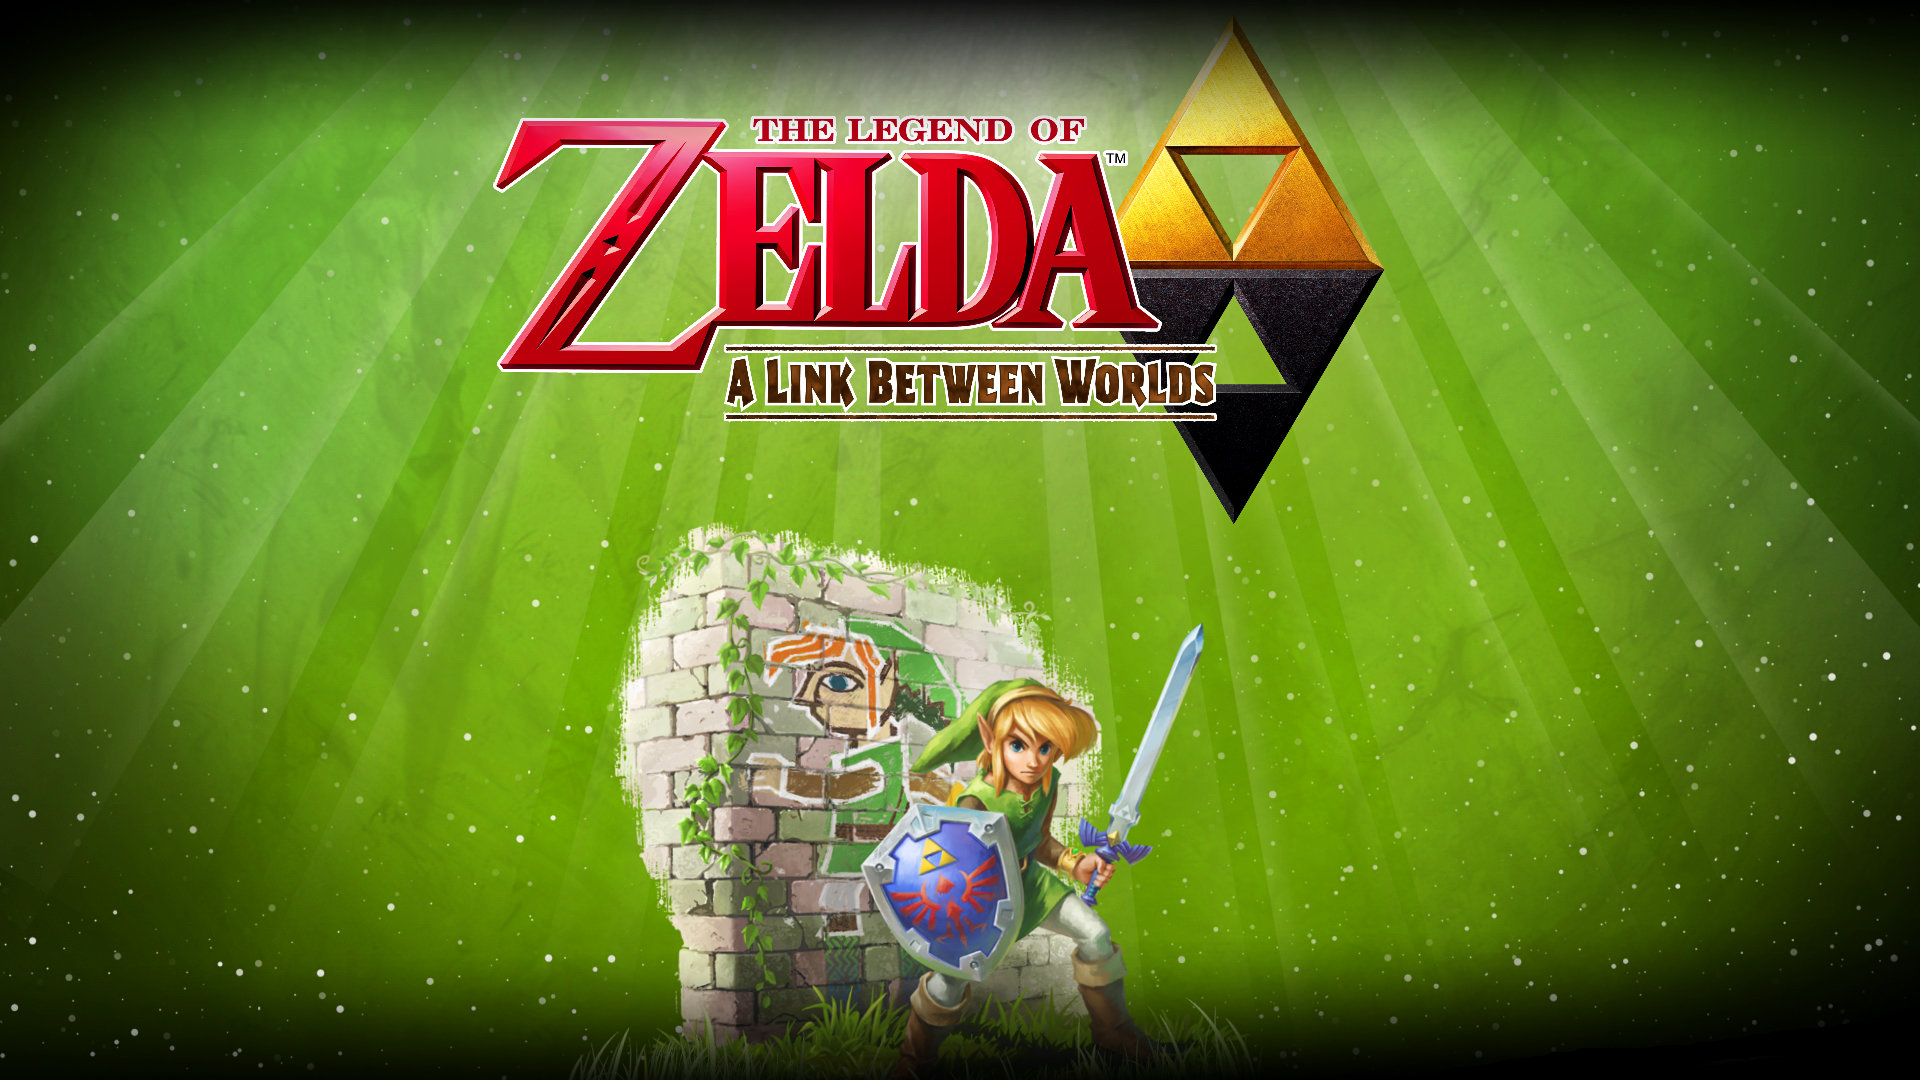 High resolution The Legend Of Zelda: A Link Between Worlds full hd wallpaper ID:69254 for computer